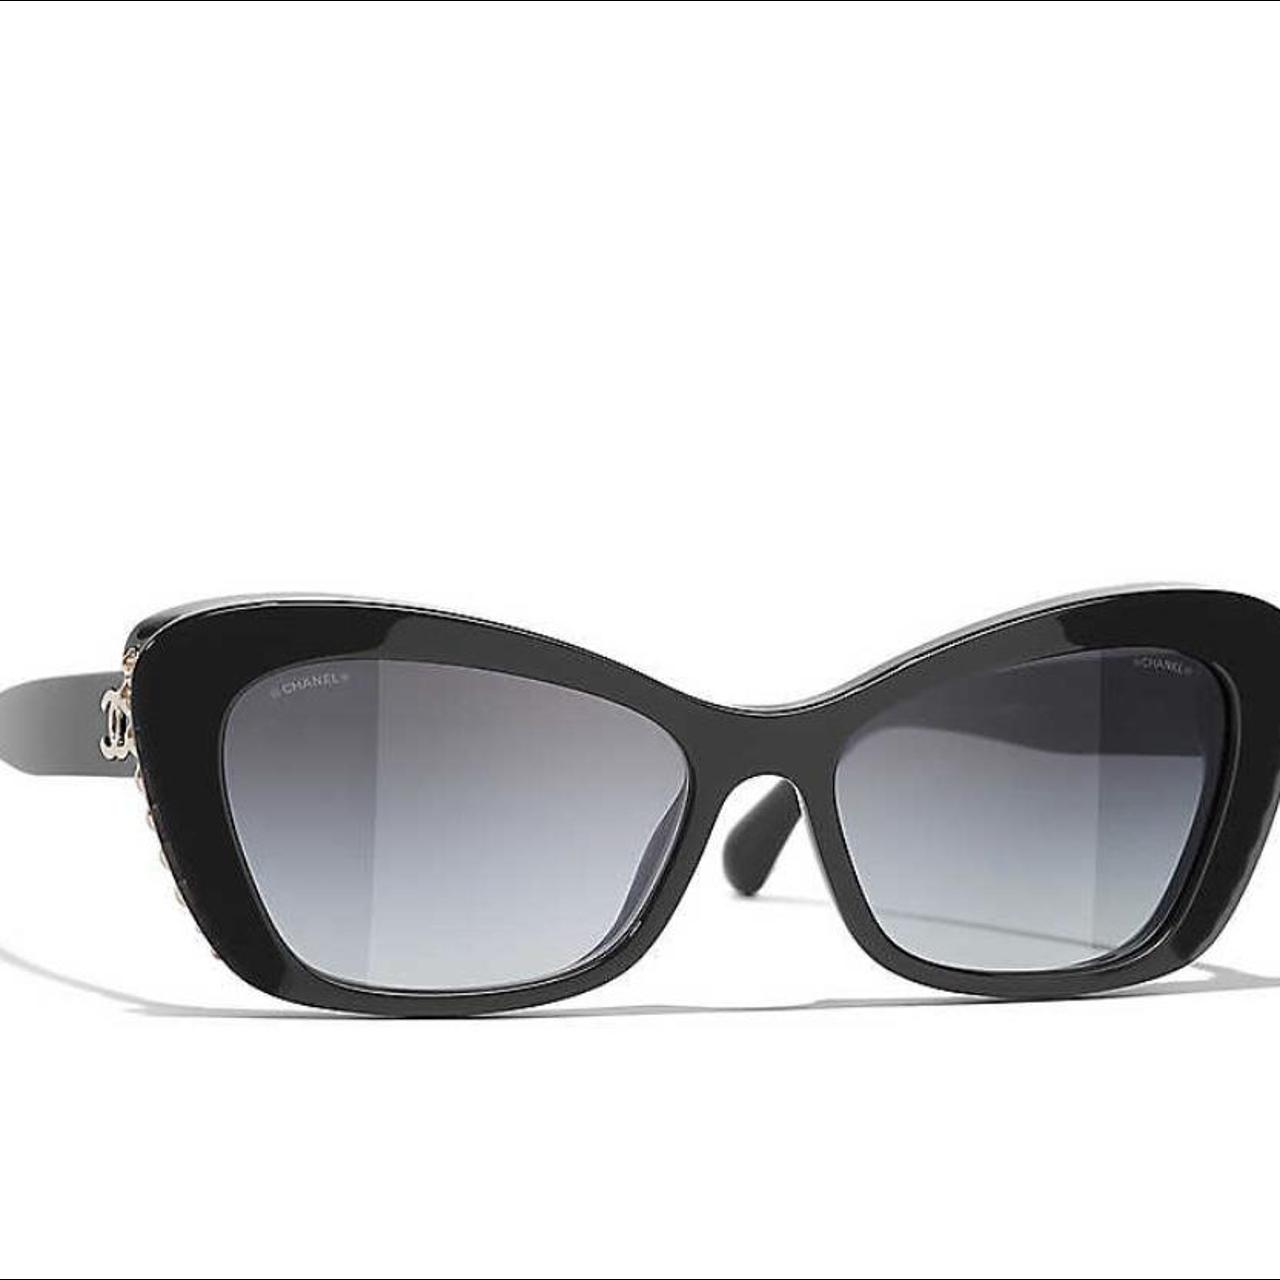 Chanel Women's Sunglasses